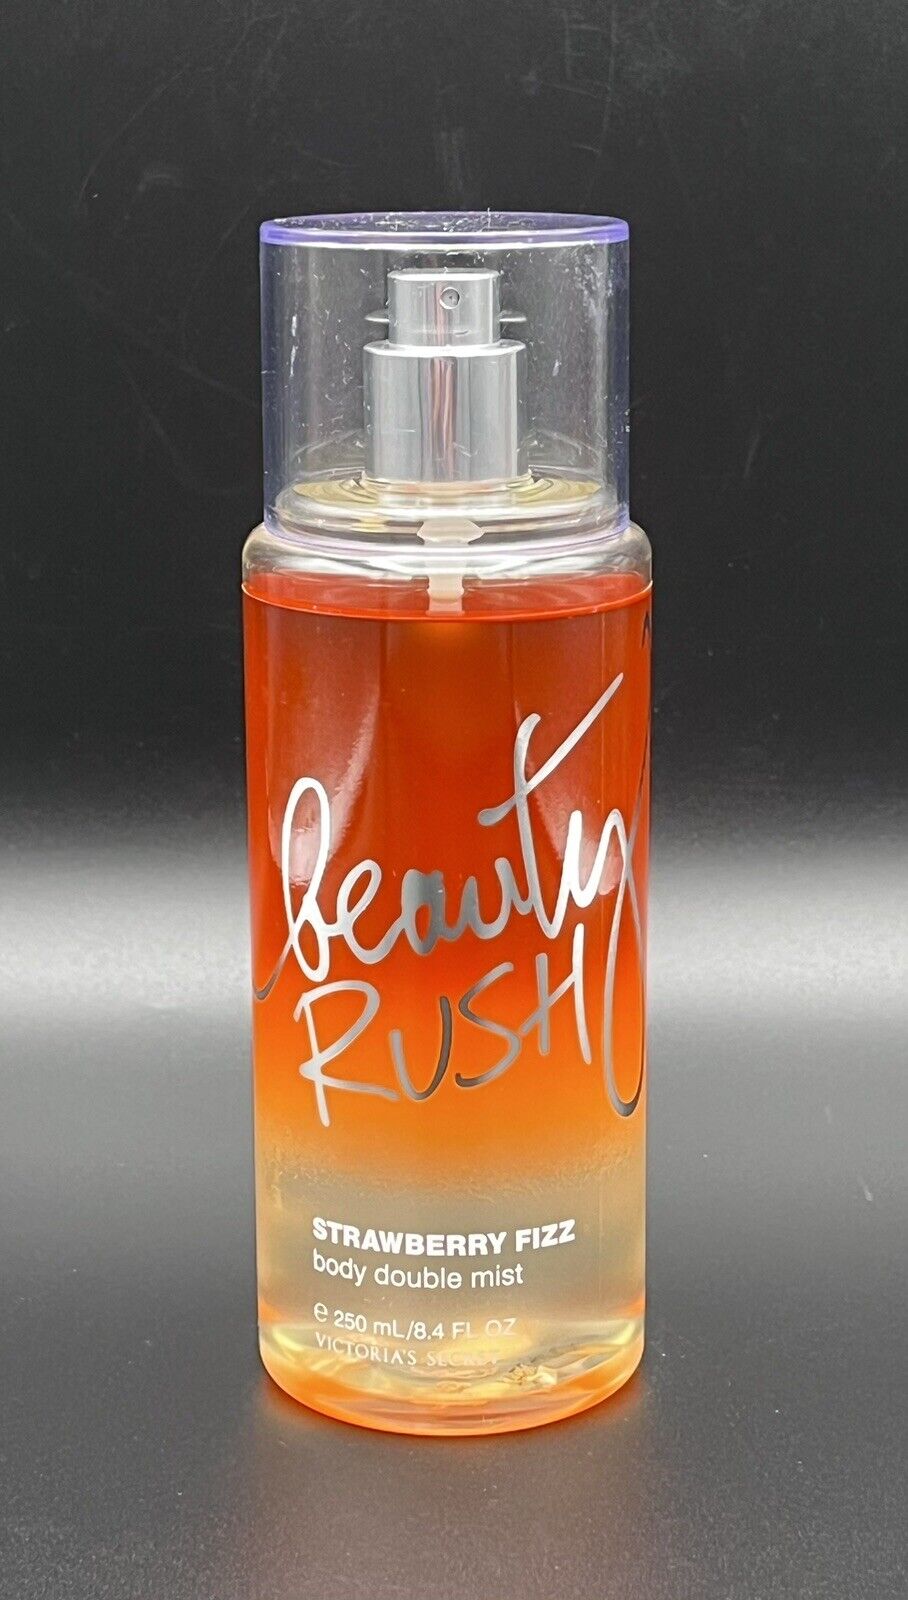 Victoria’s Secret Beauty Rush Strawberry Fizz Body Double Mist  8.4 Fl Oz